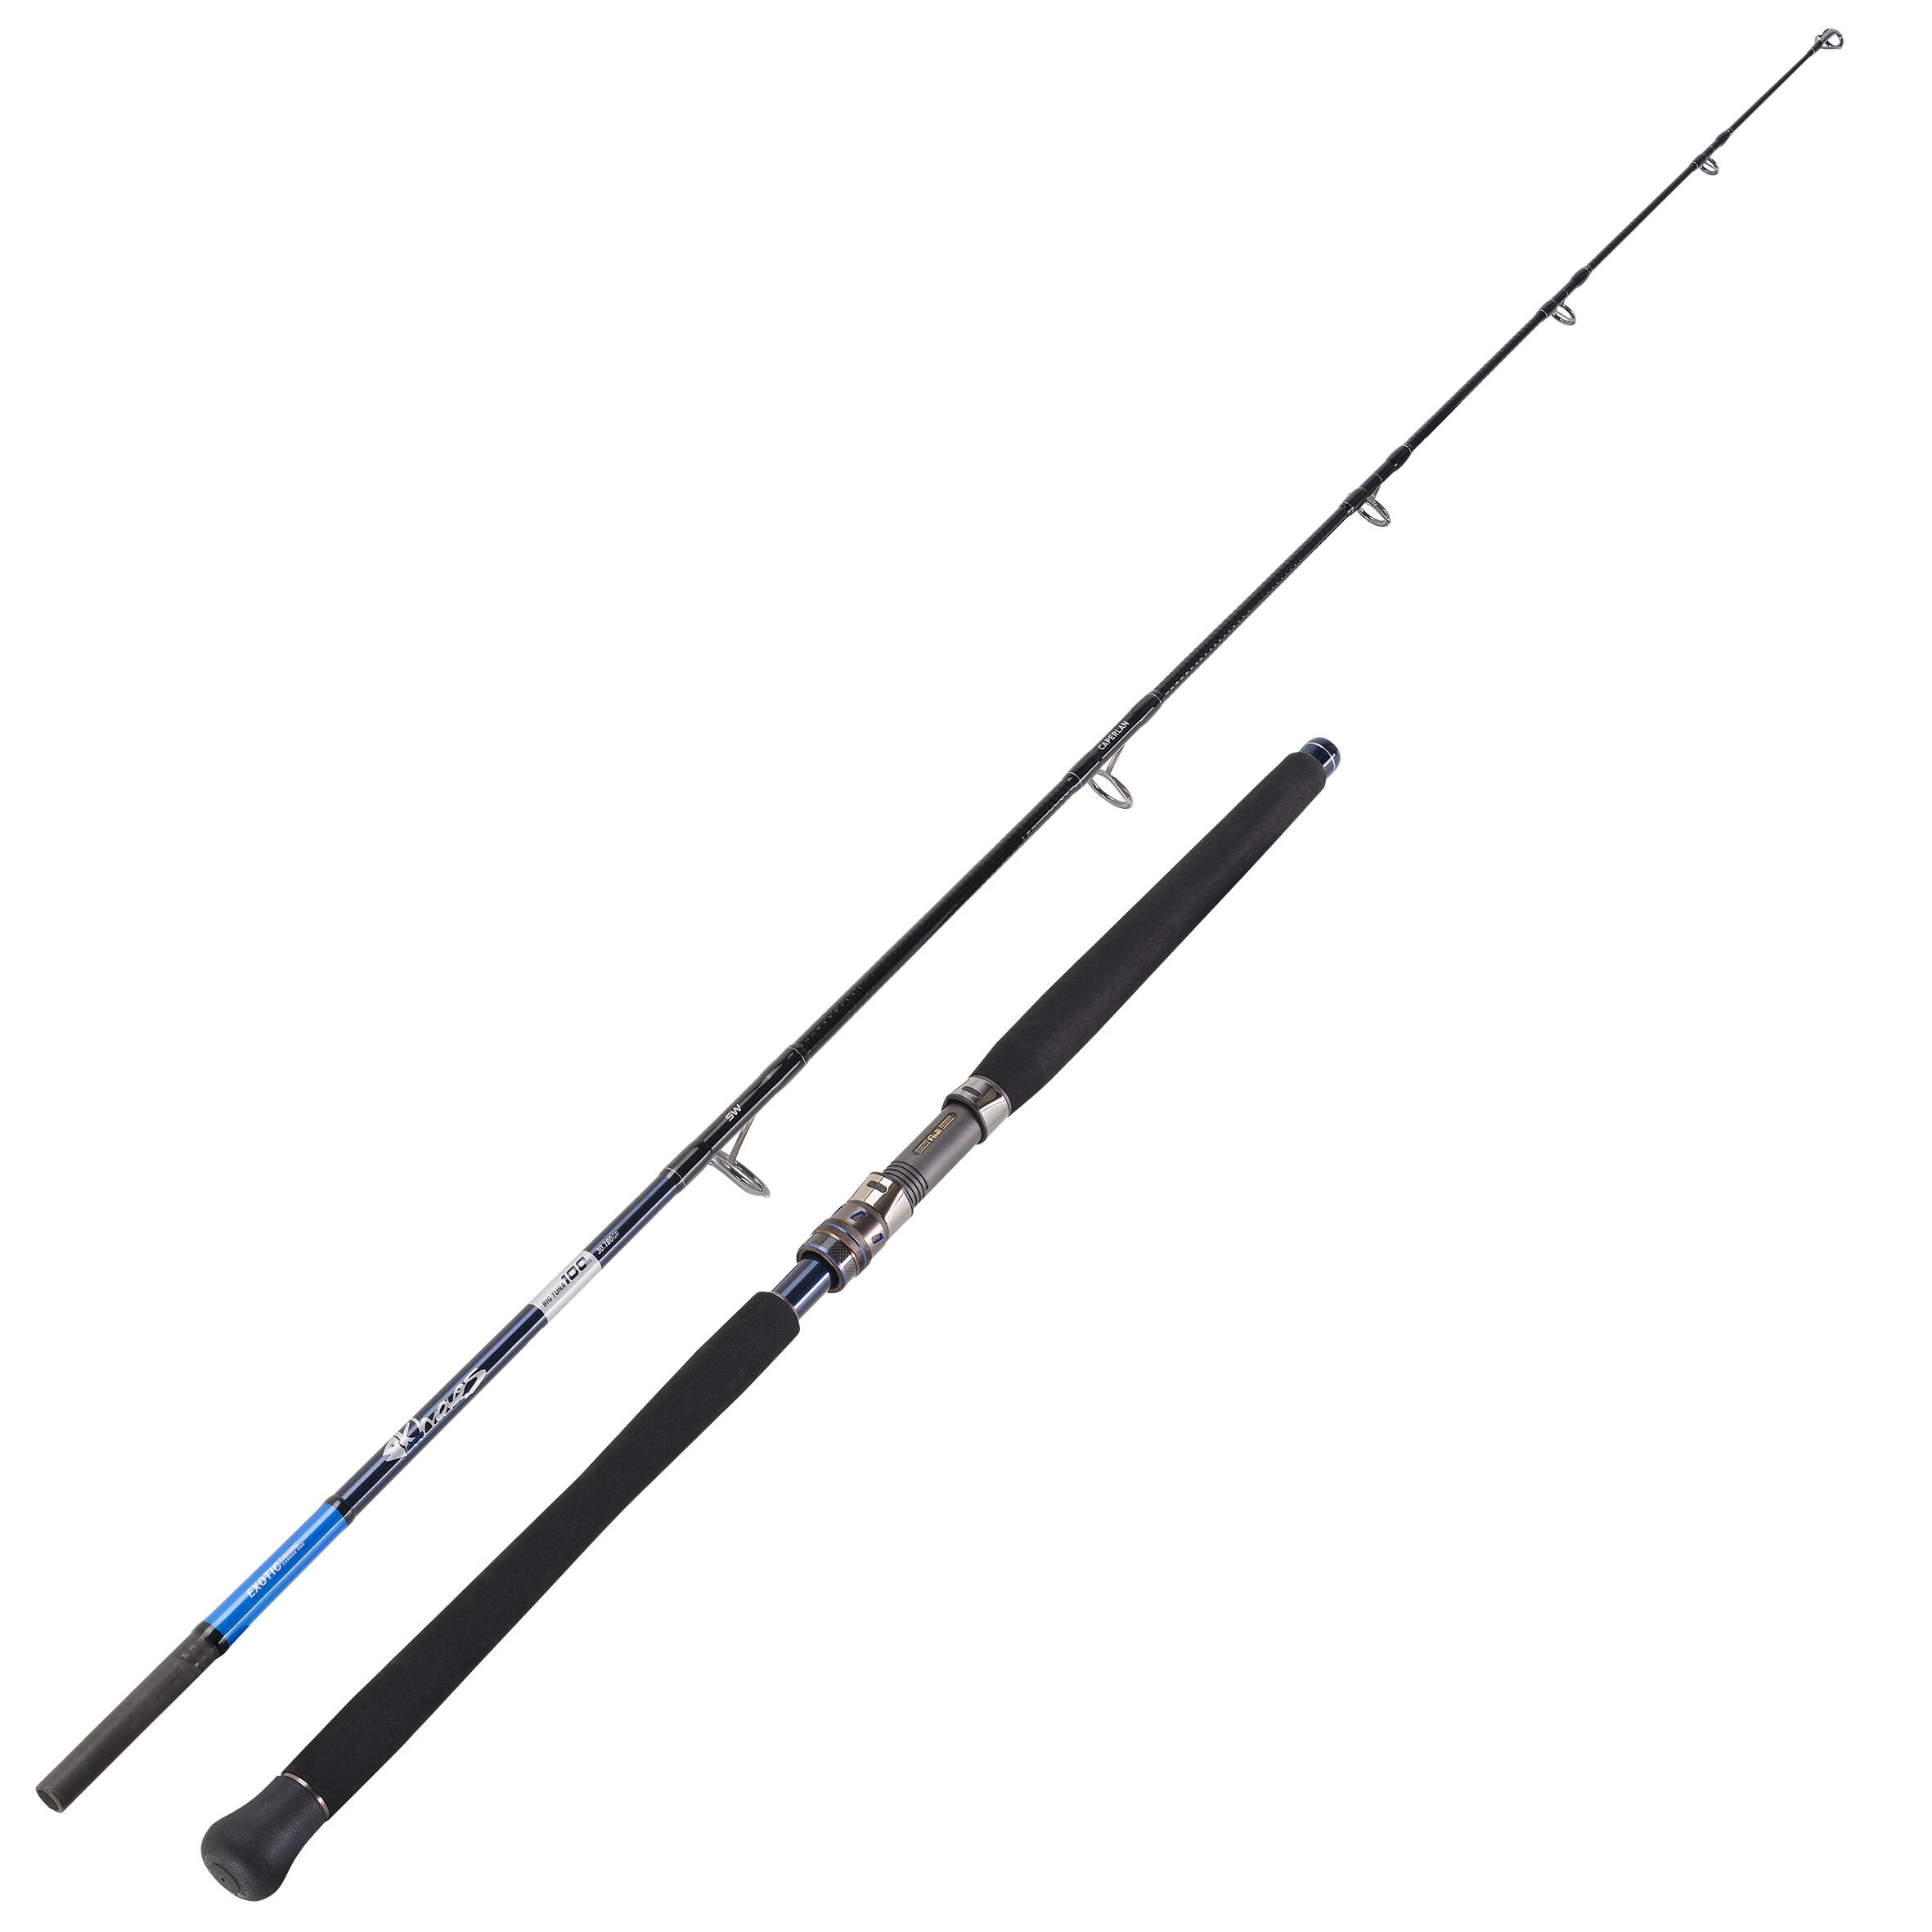 Exotic fishing rod KHAOS-900 243 100 lbs for tuna fishing in the sea  CAPERLAN